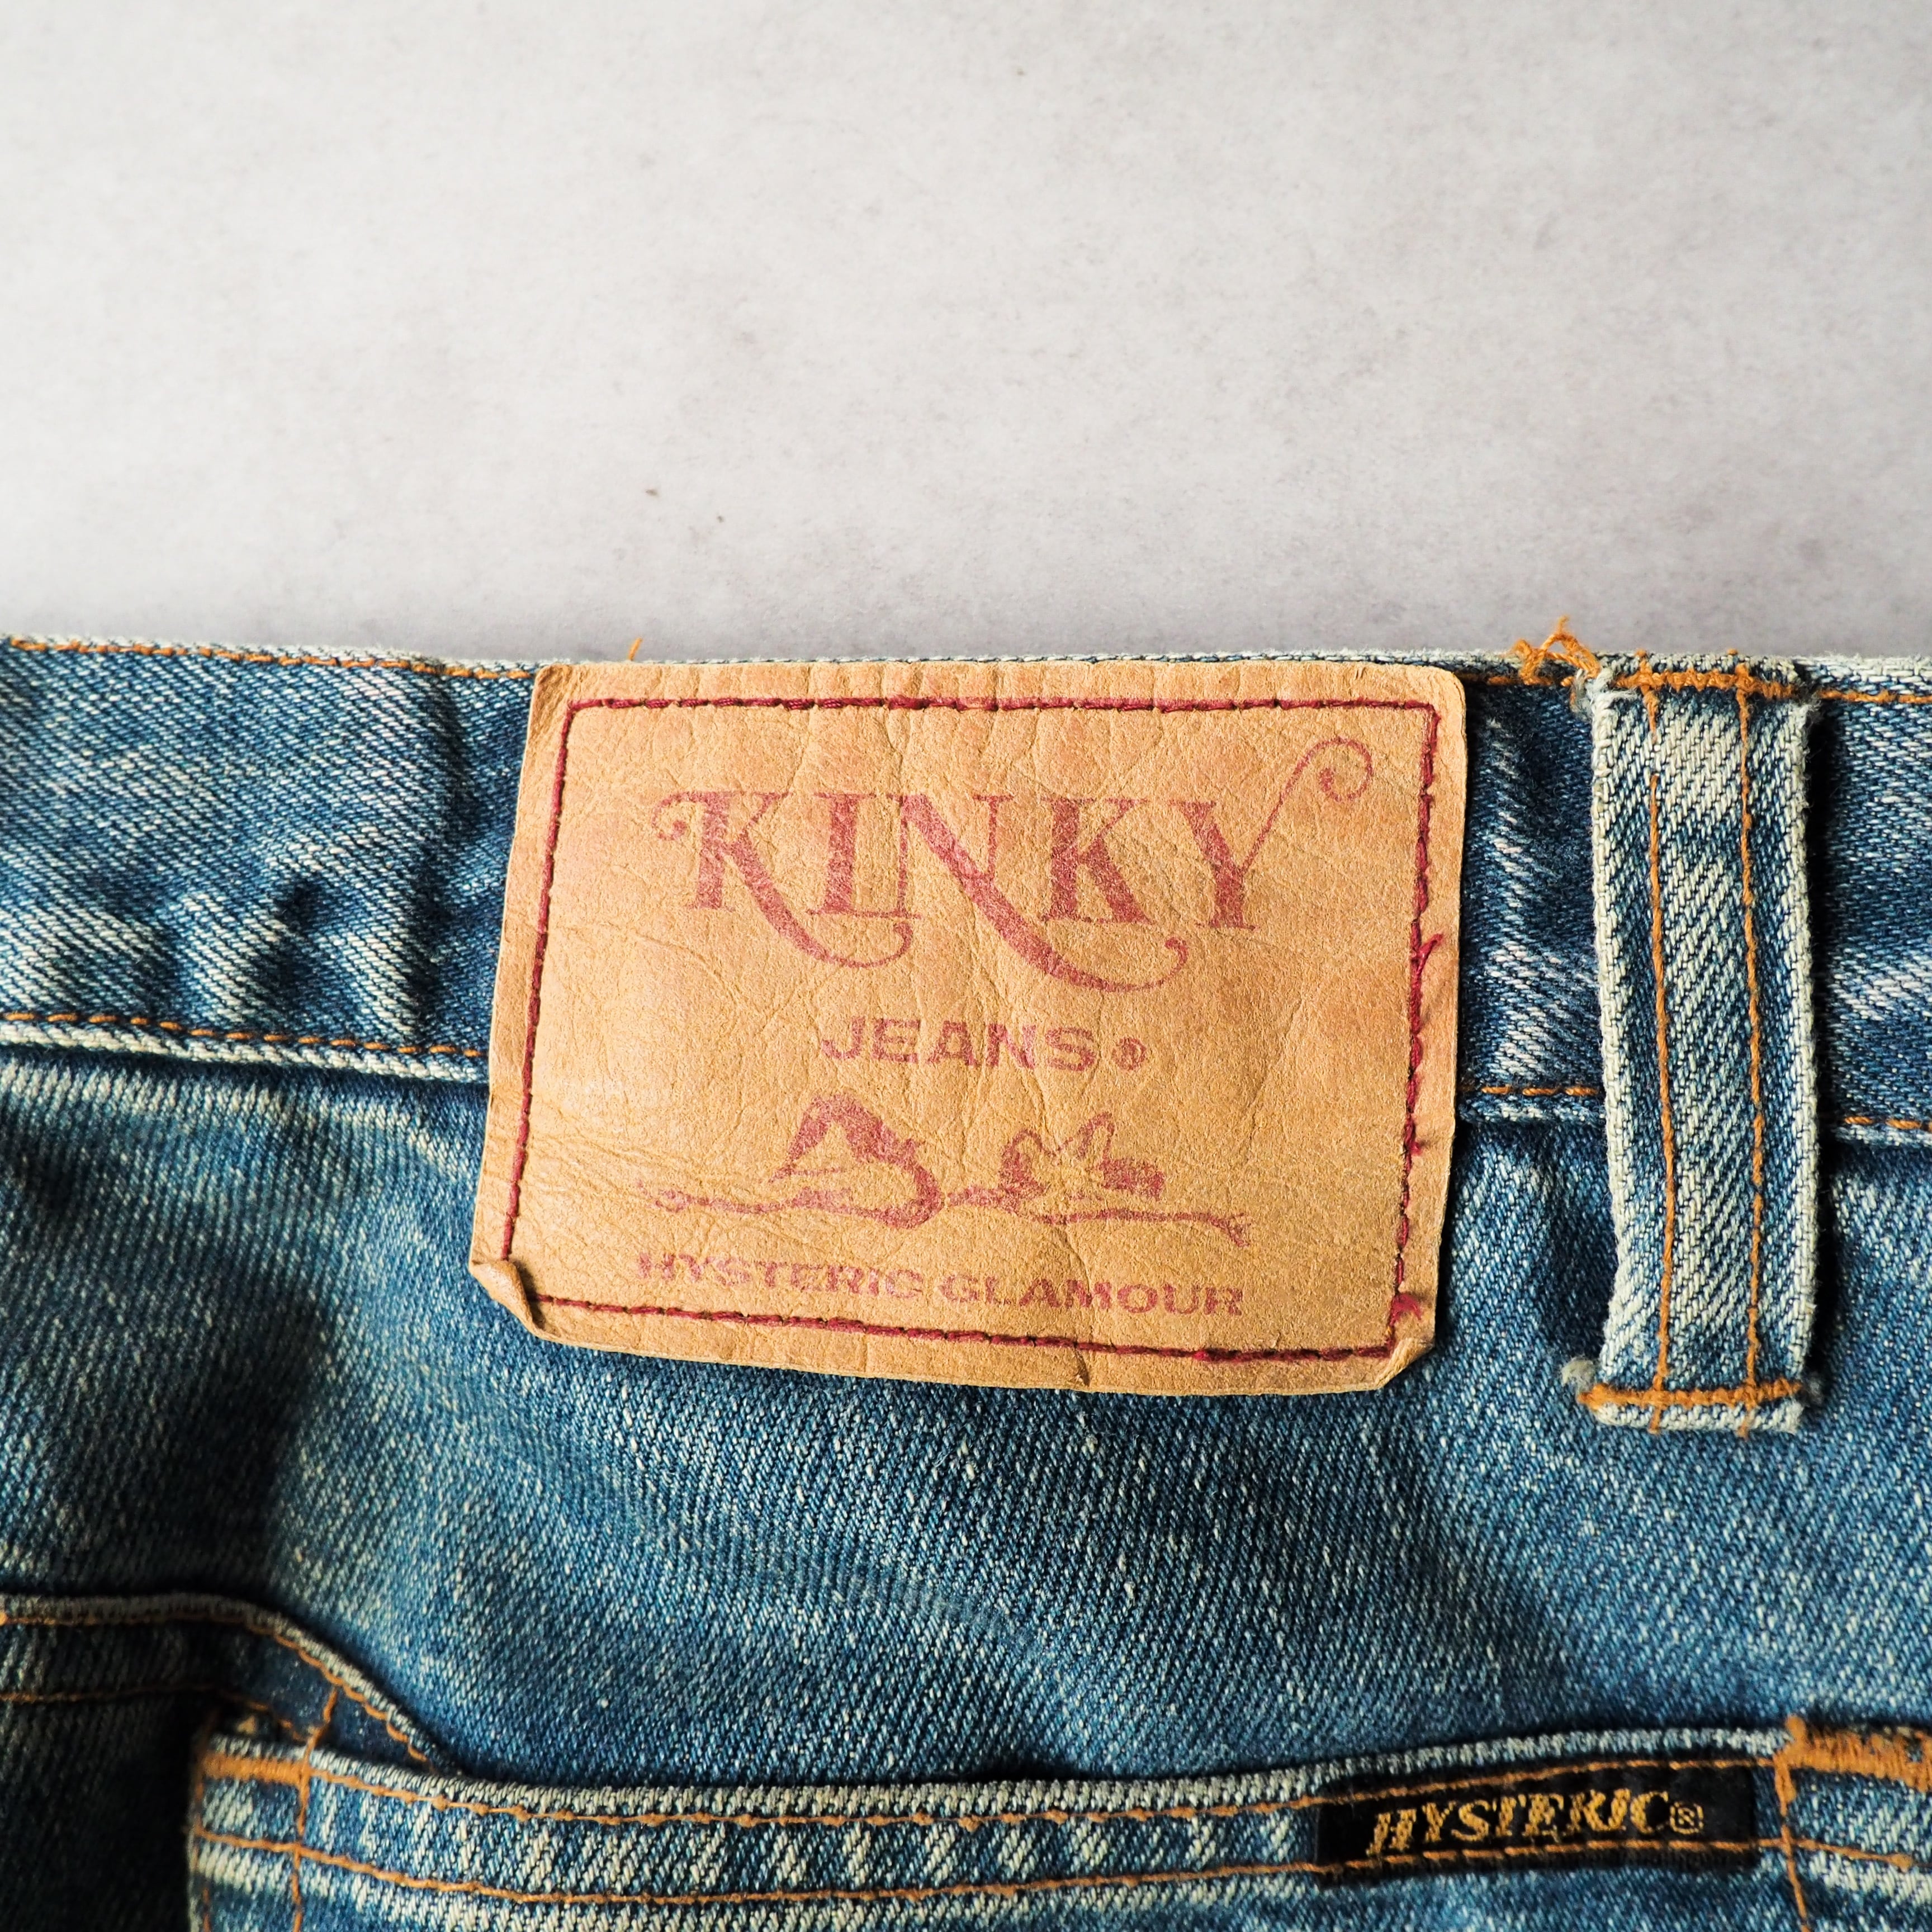 90s-00s “hysteric glamour kinvy” boots cut denim pants 90年代 2000